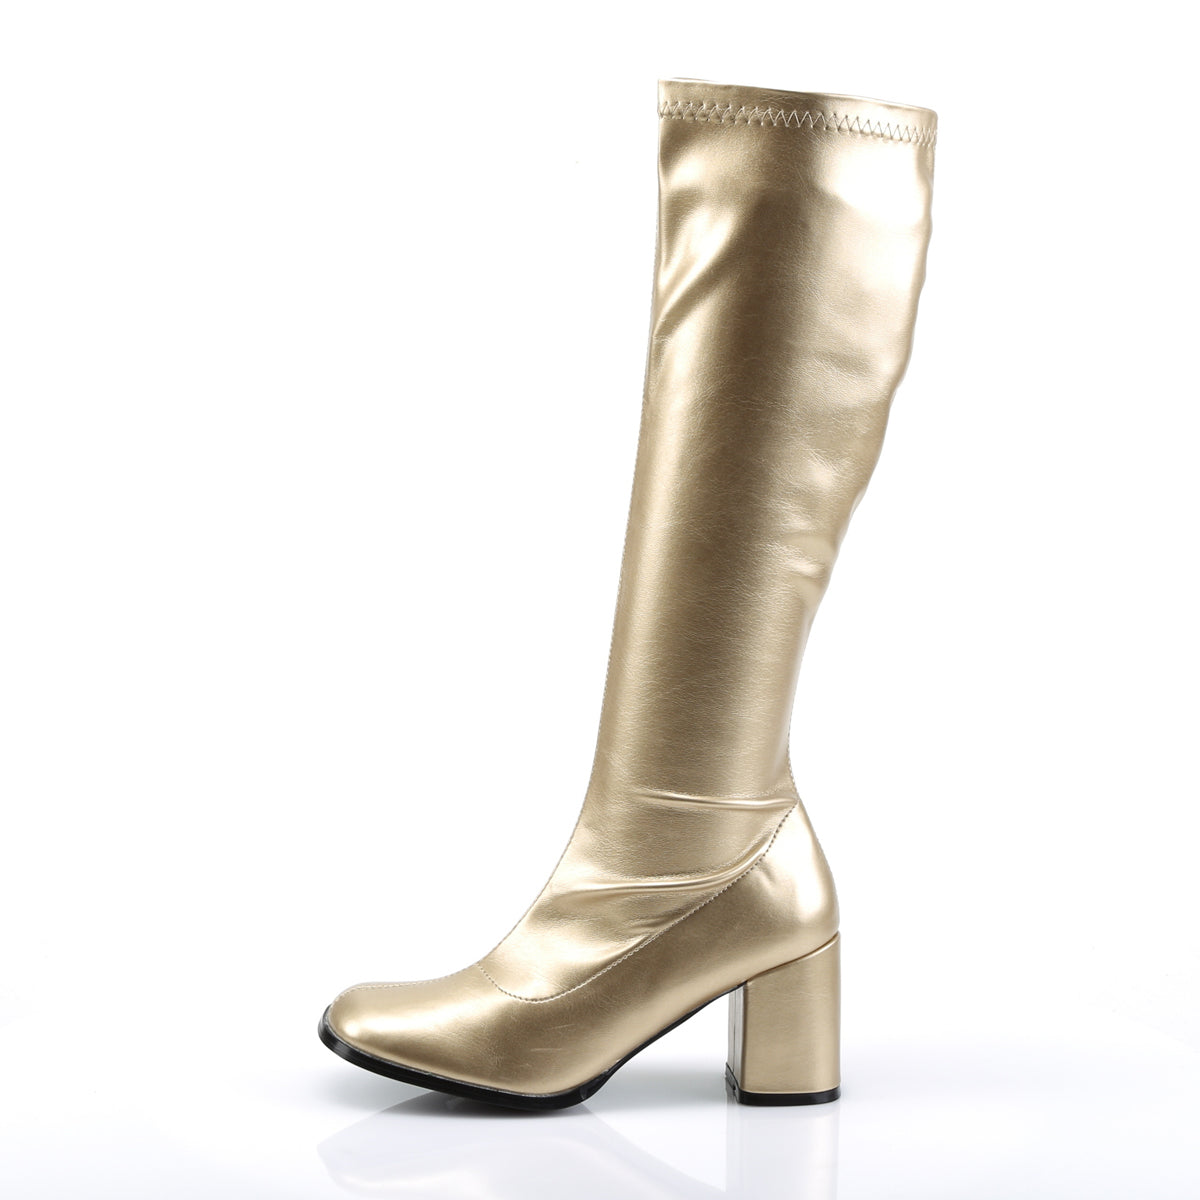 GOGO-300 3 Inch Heel Gold Women's Boots Funtasma Costume Shoes 